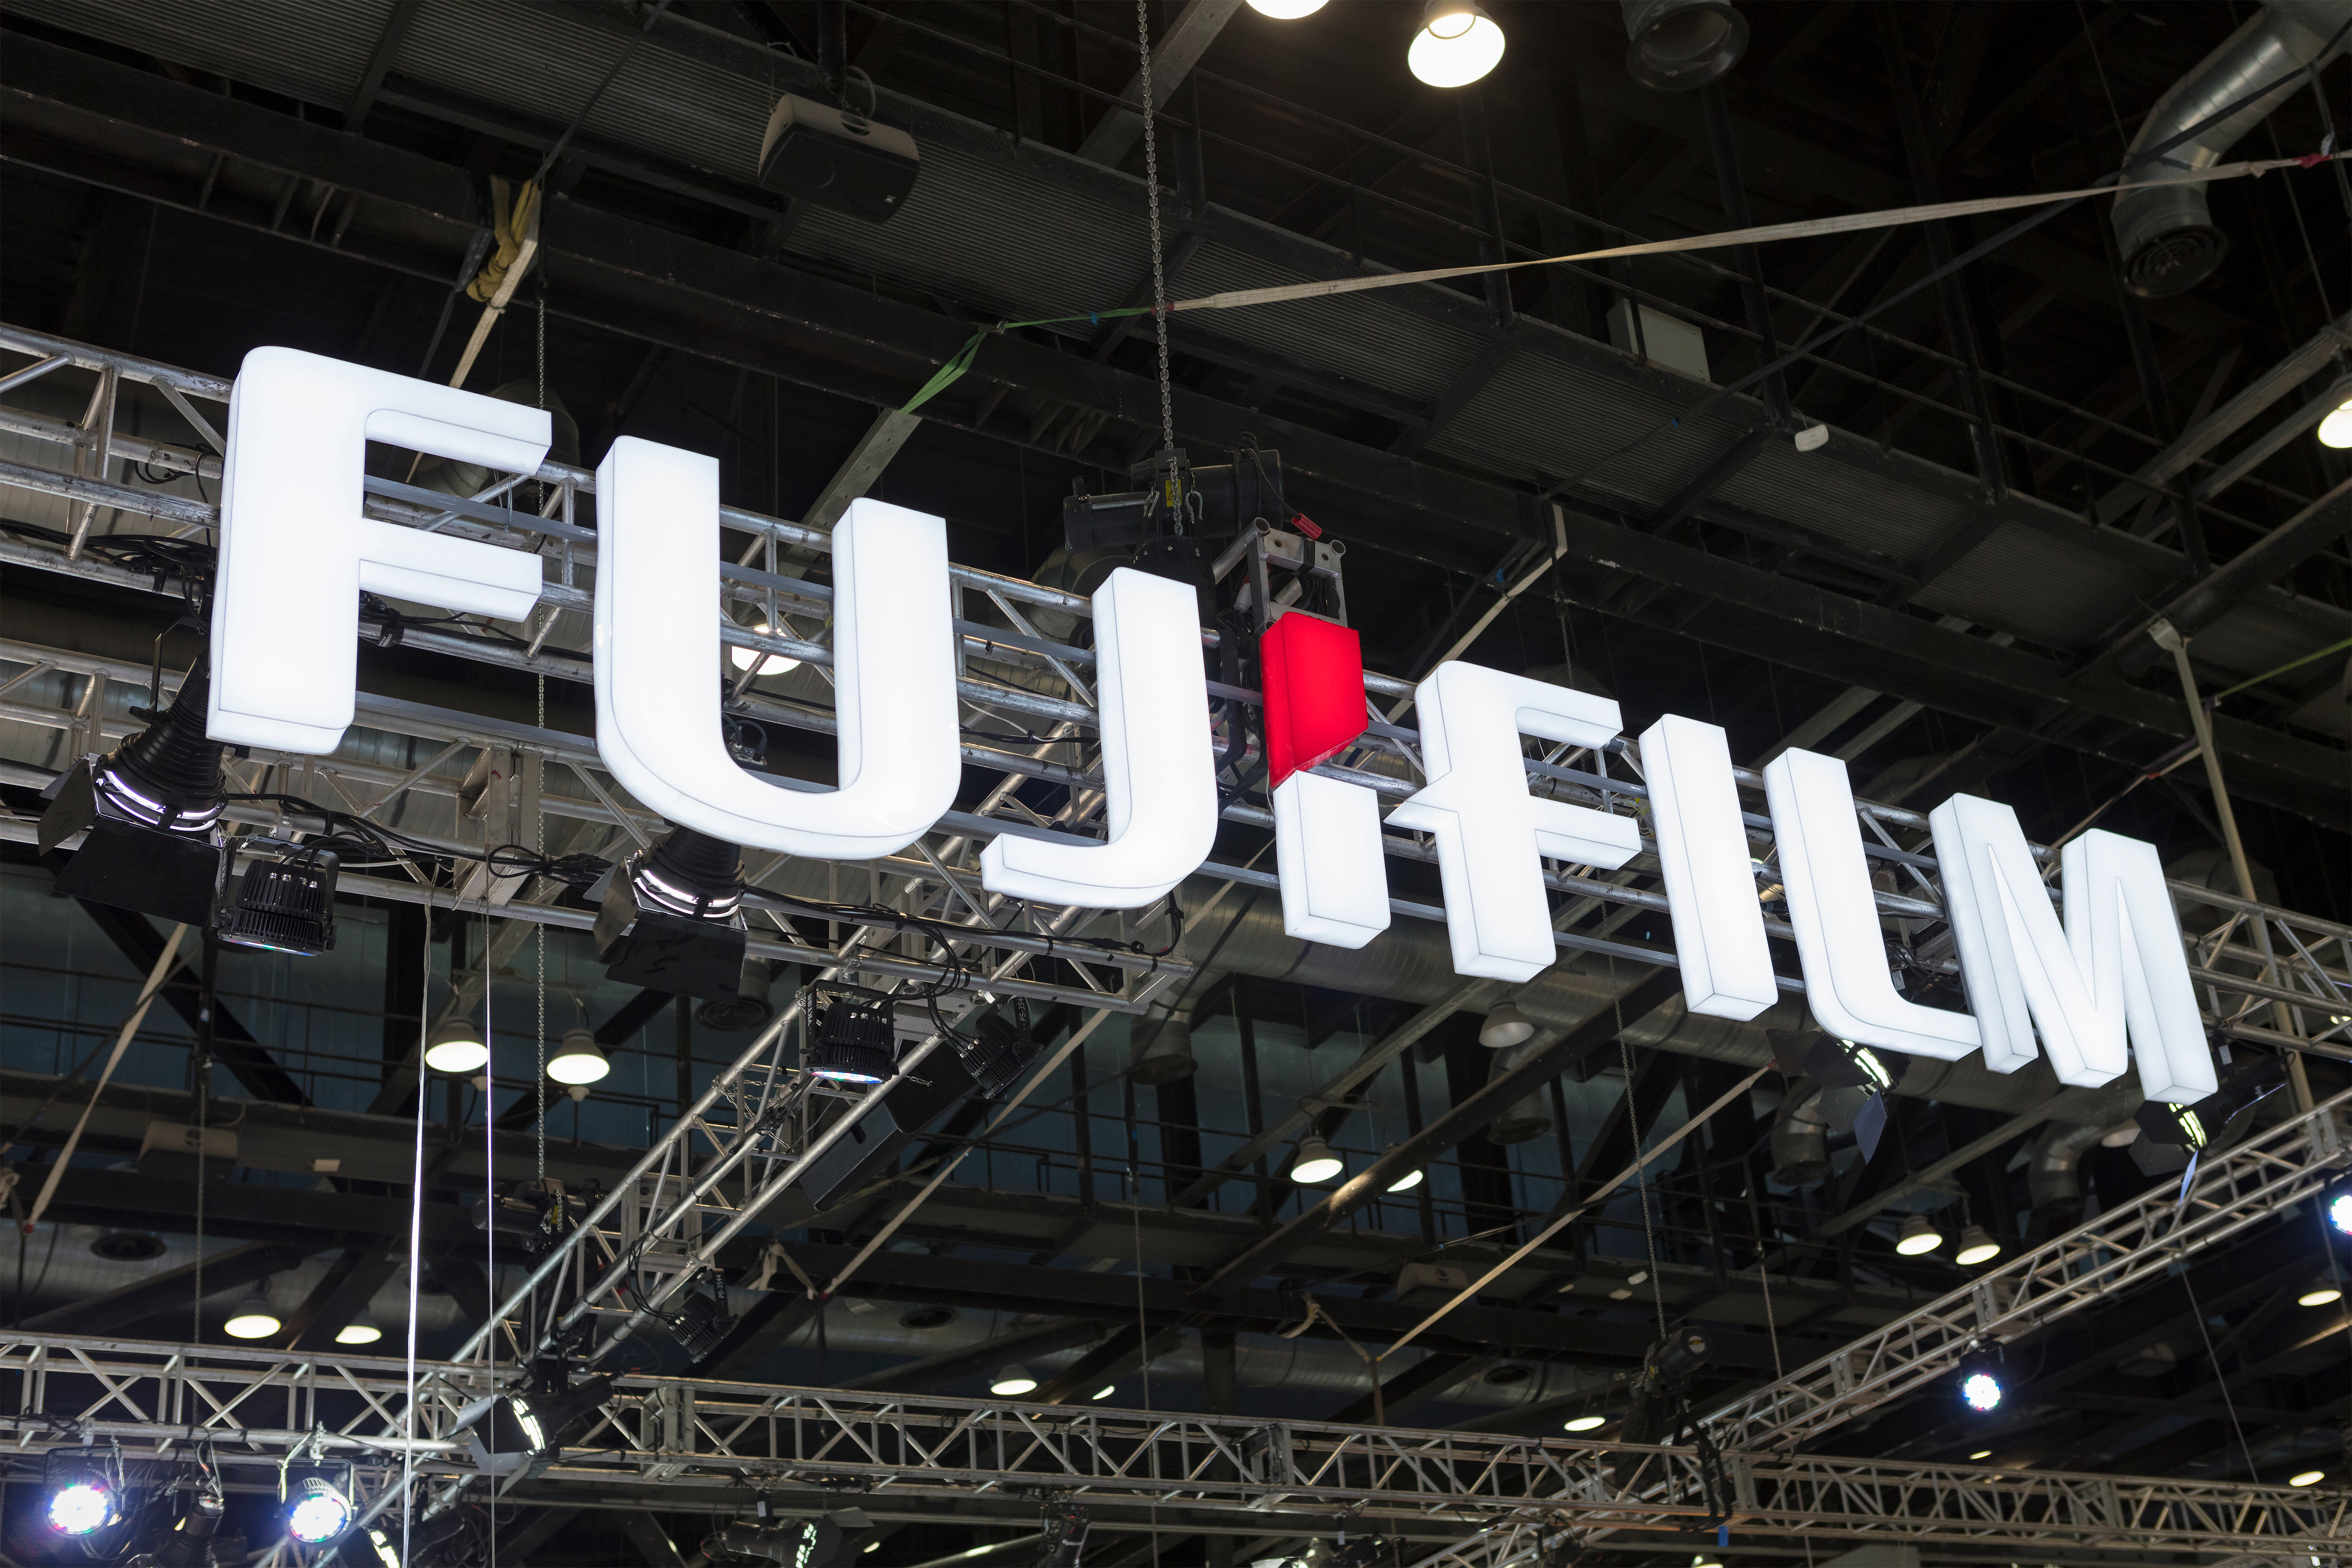 3.30 Fujifilm BI Embedded